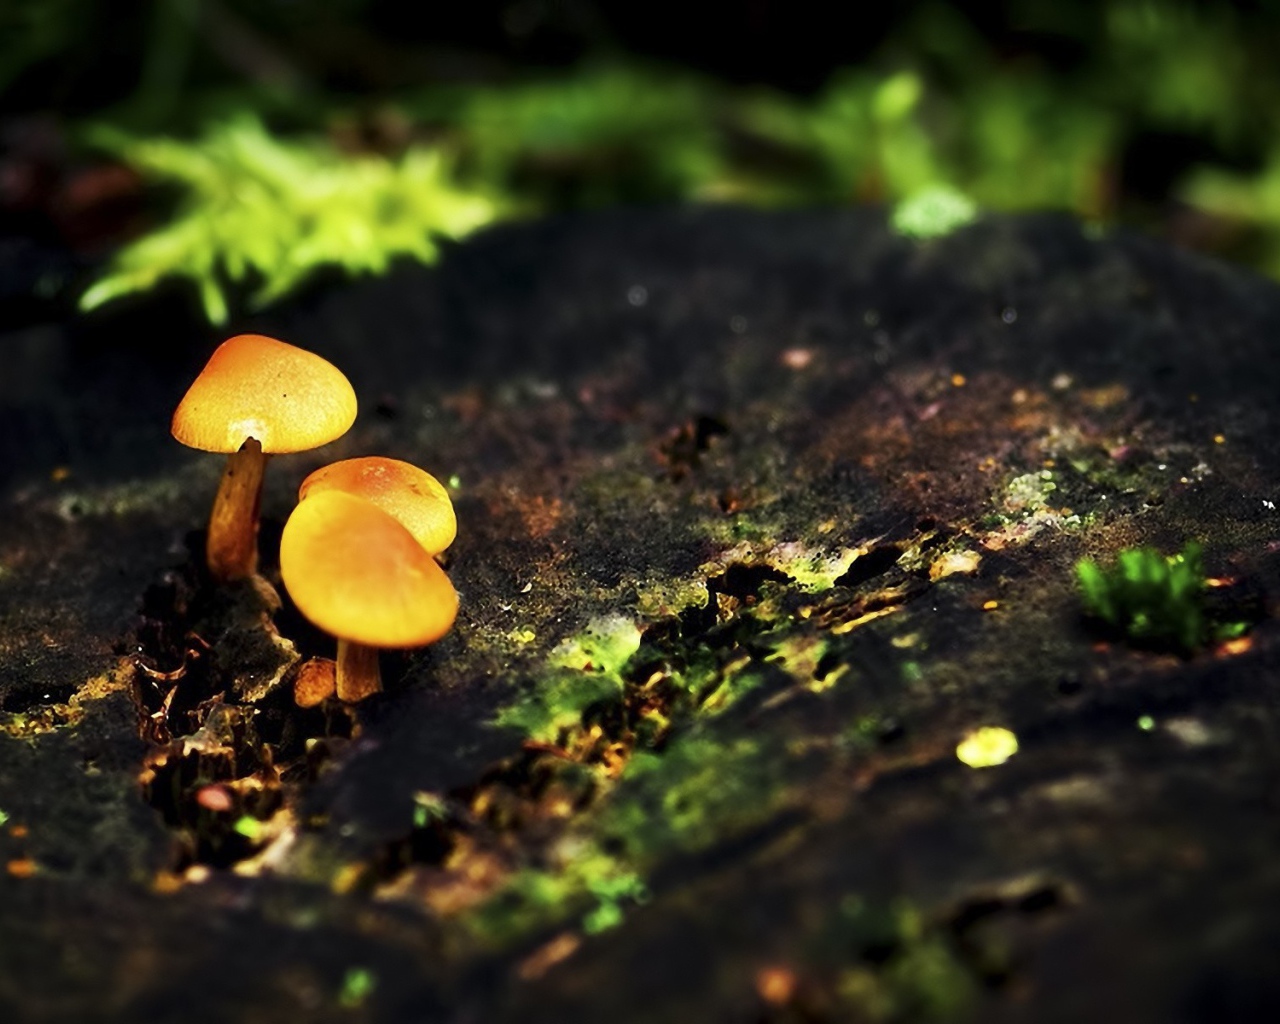 Three little fungus